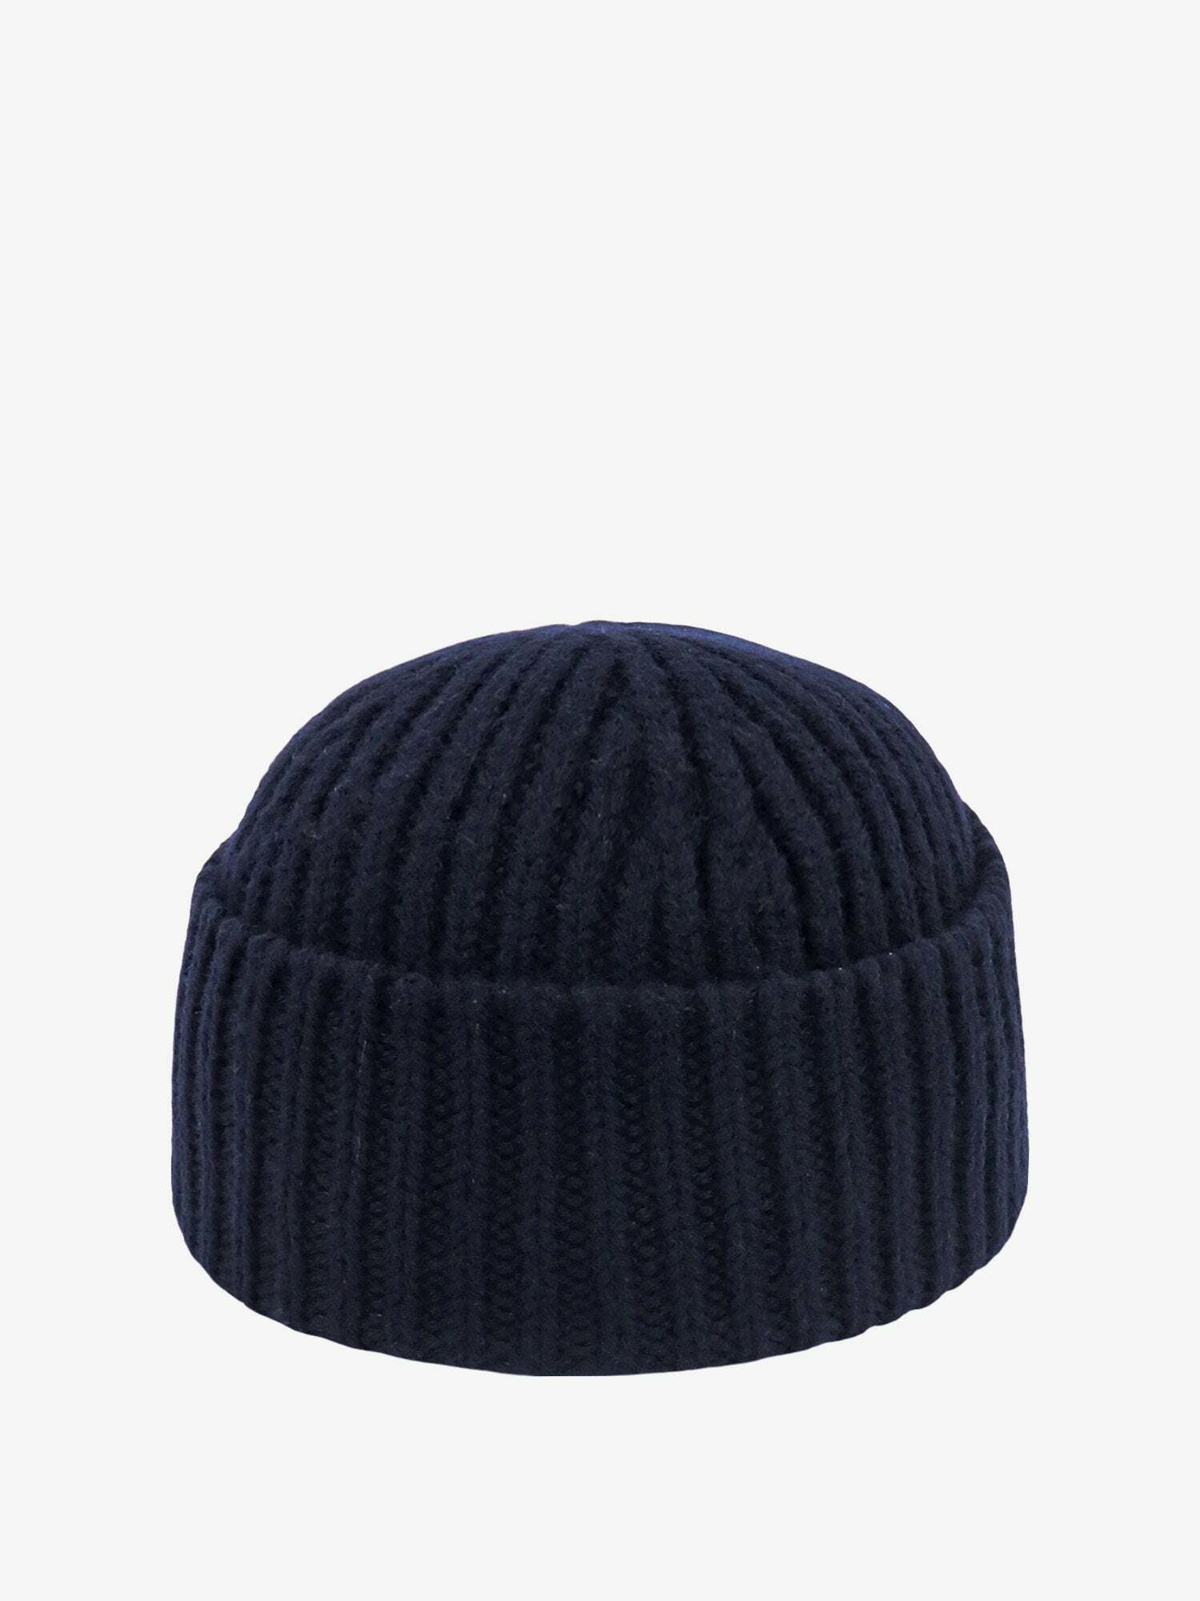 Gucci GG Canvas Bucket Hat - Blue Hats, Accessories - GUC1323344